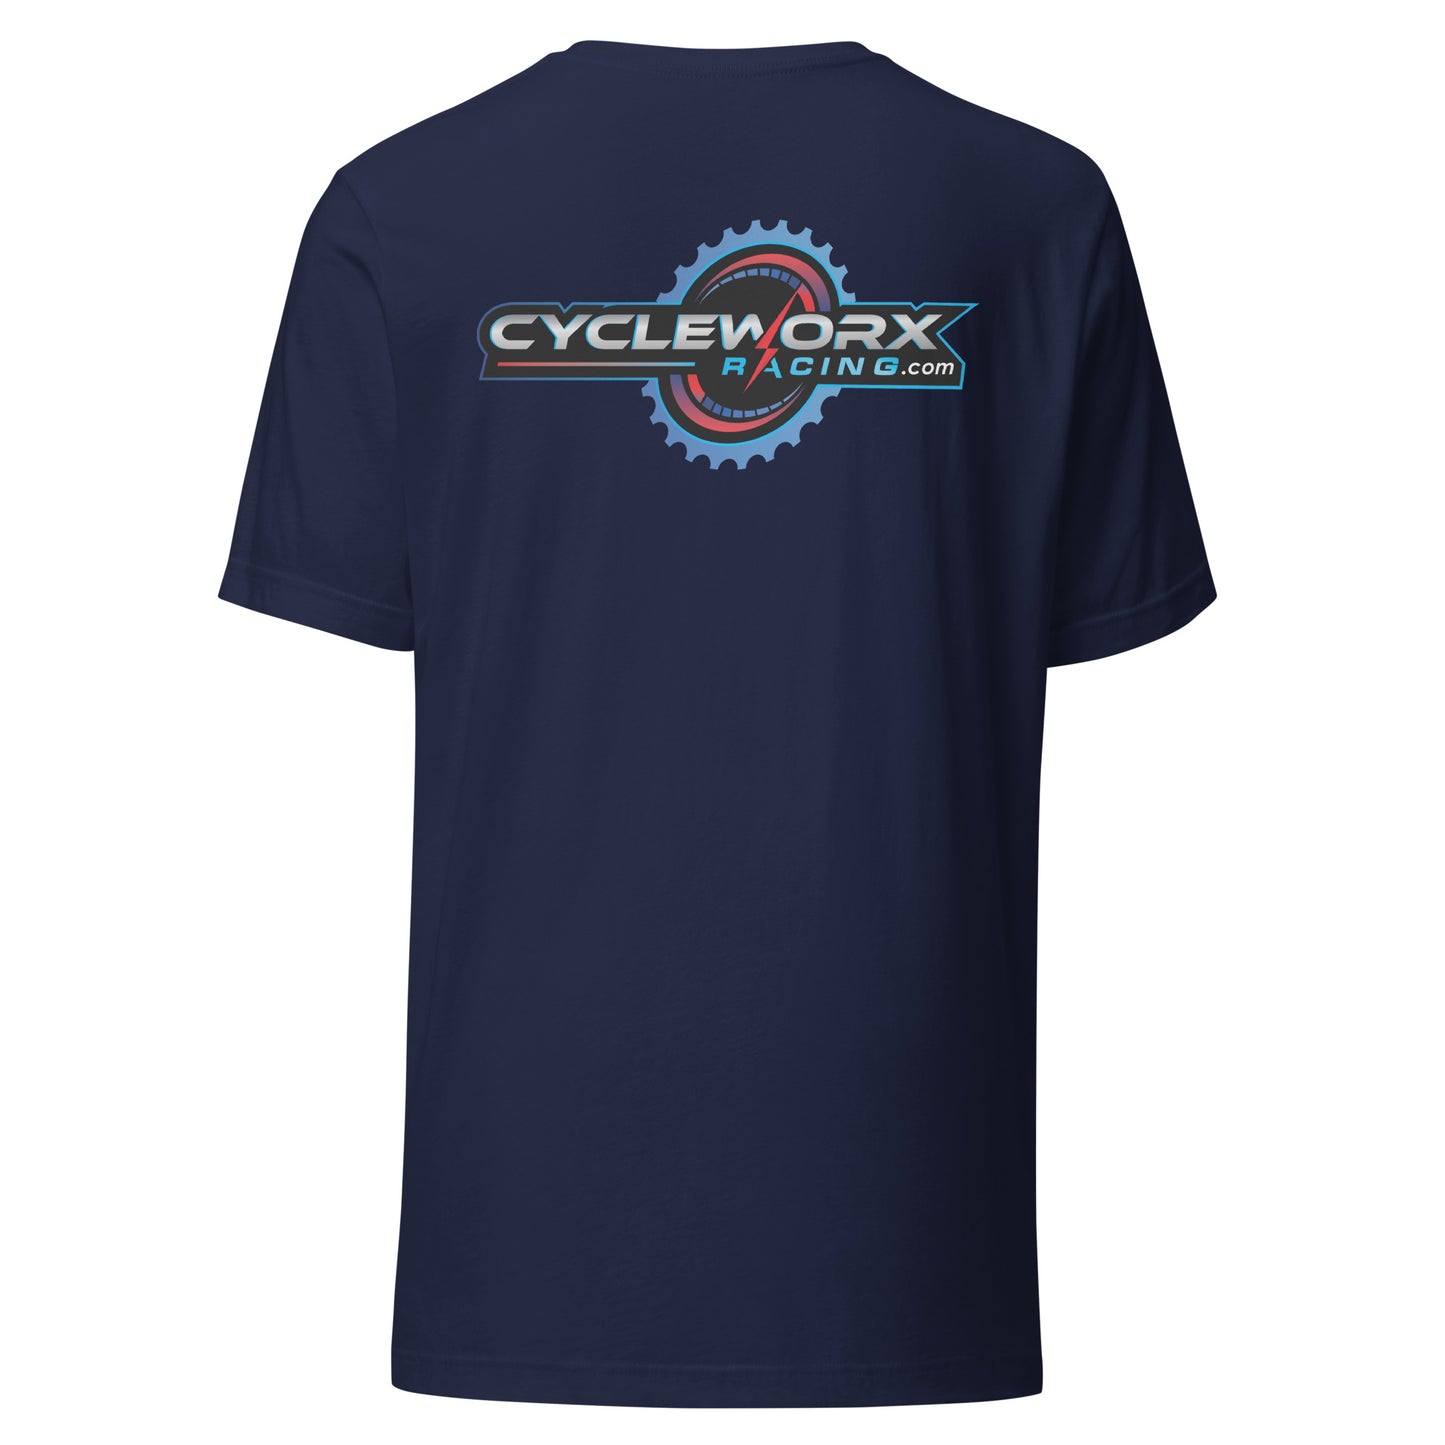 Cycleworx Racing Unisex T-Shirt